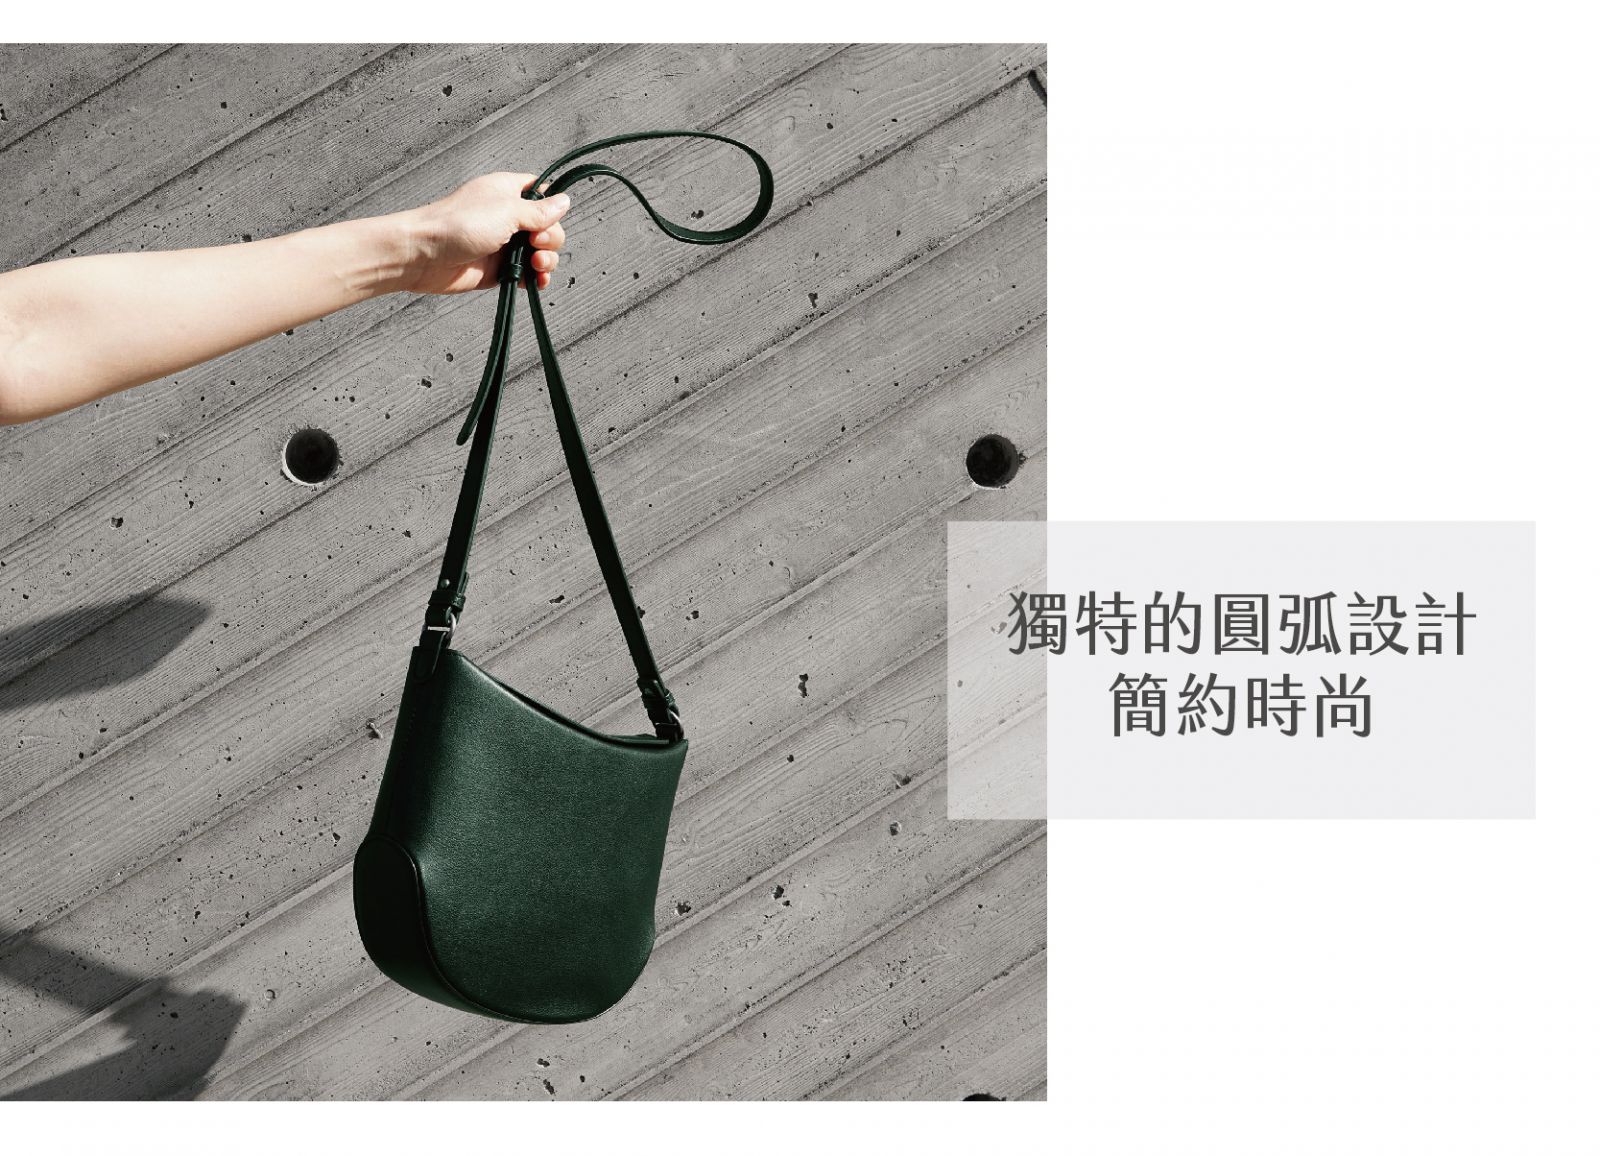 DTB-Arc Shoulder Bag 弧形側背包-Thyme Green 百里香綠